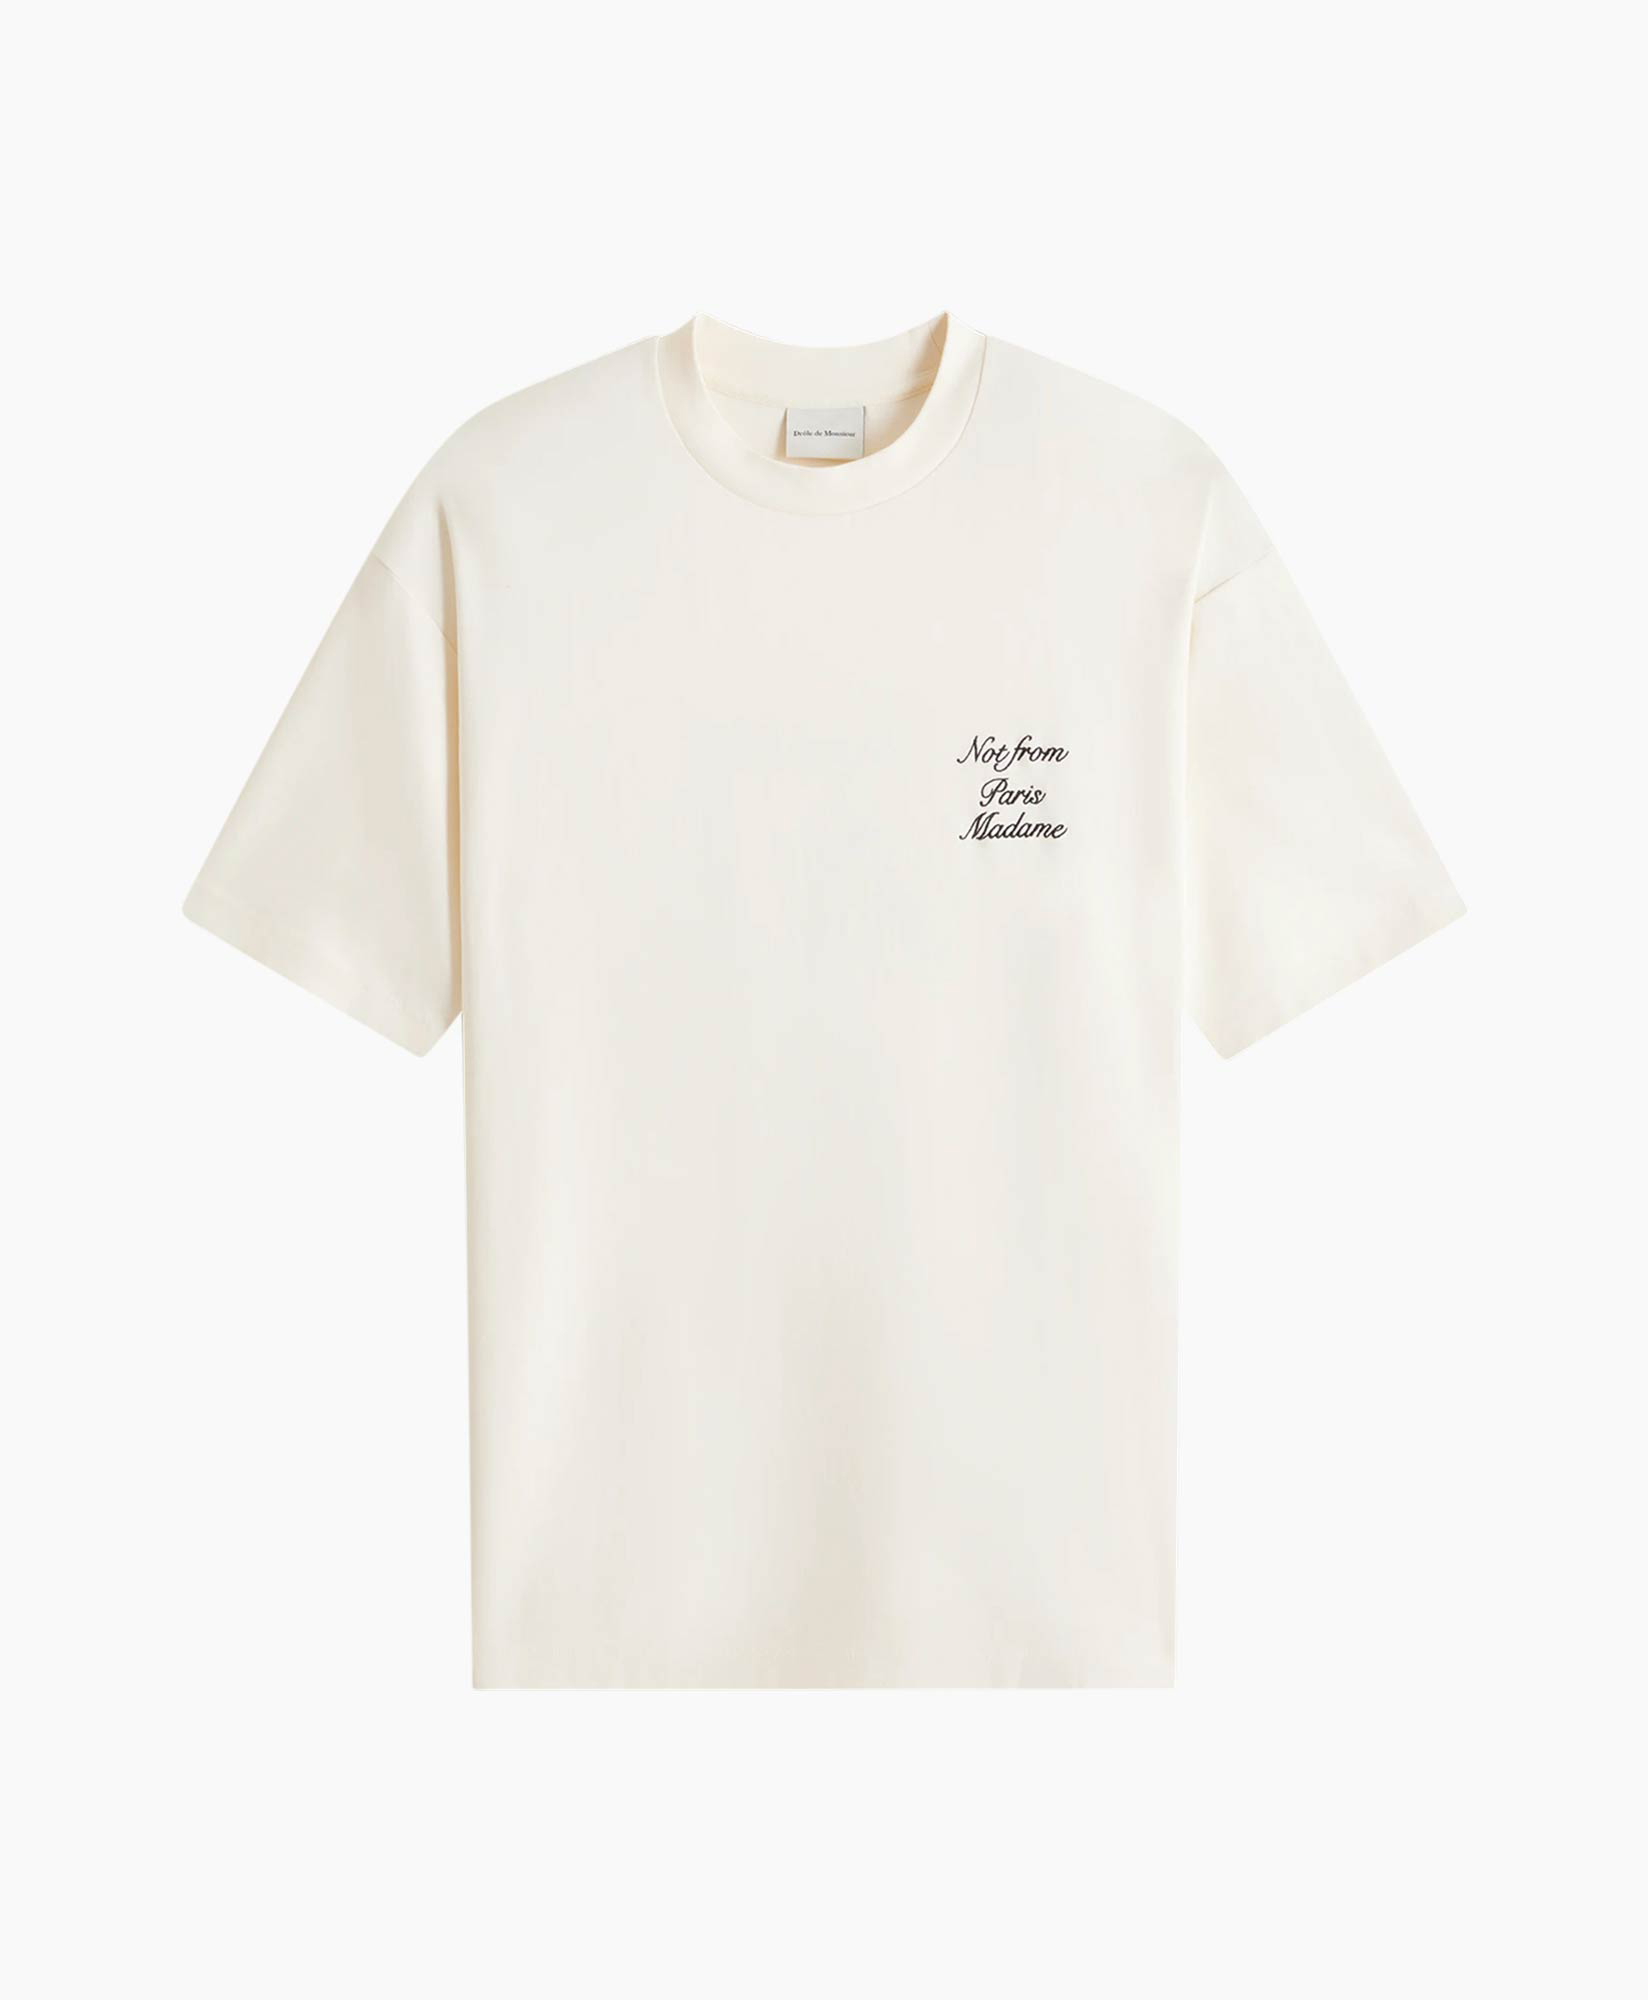 Le T-shirt Sloga Cursive Off White